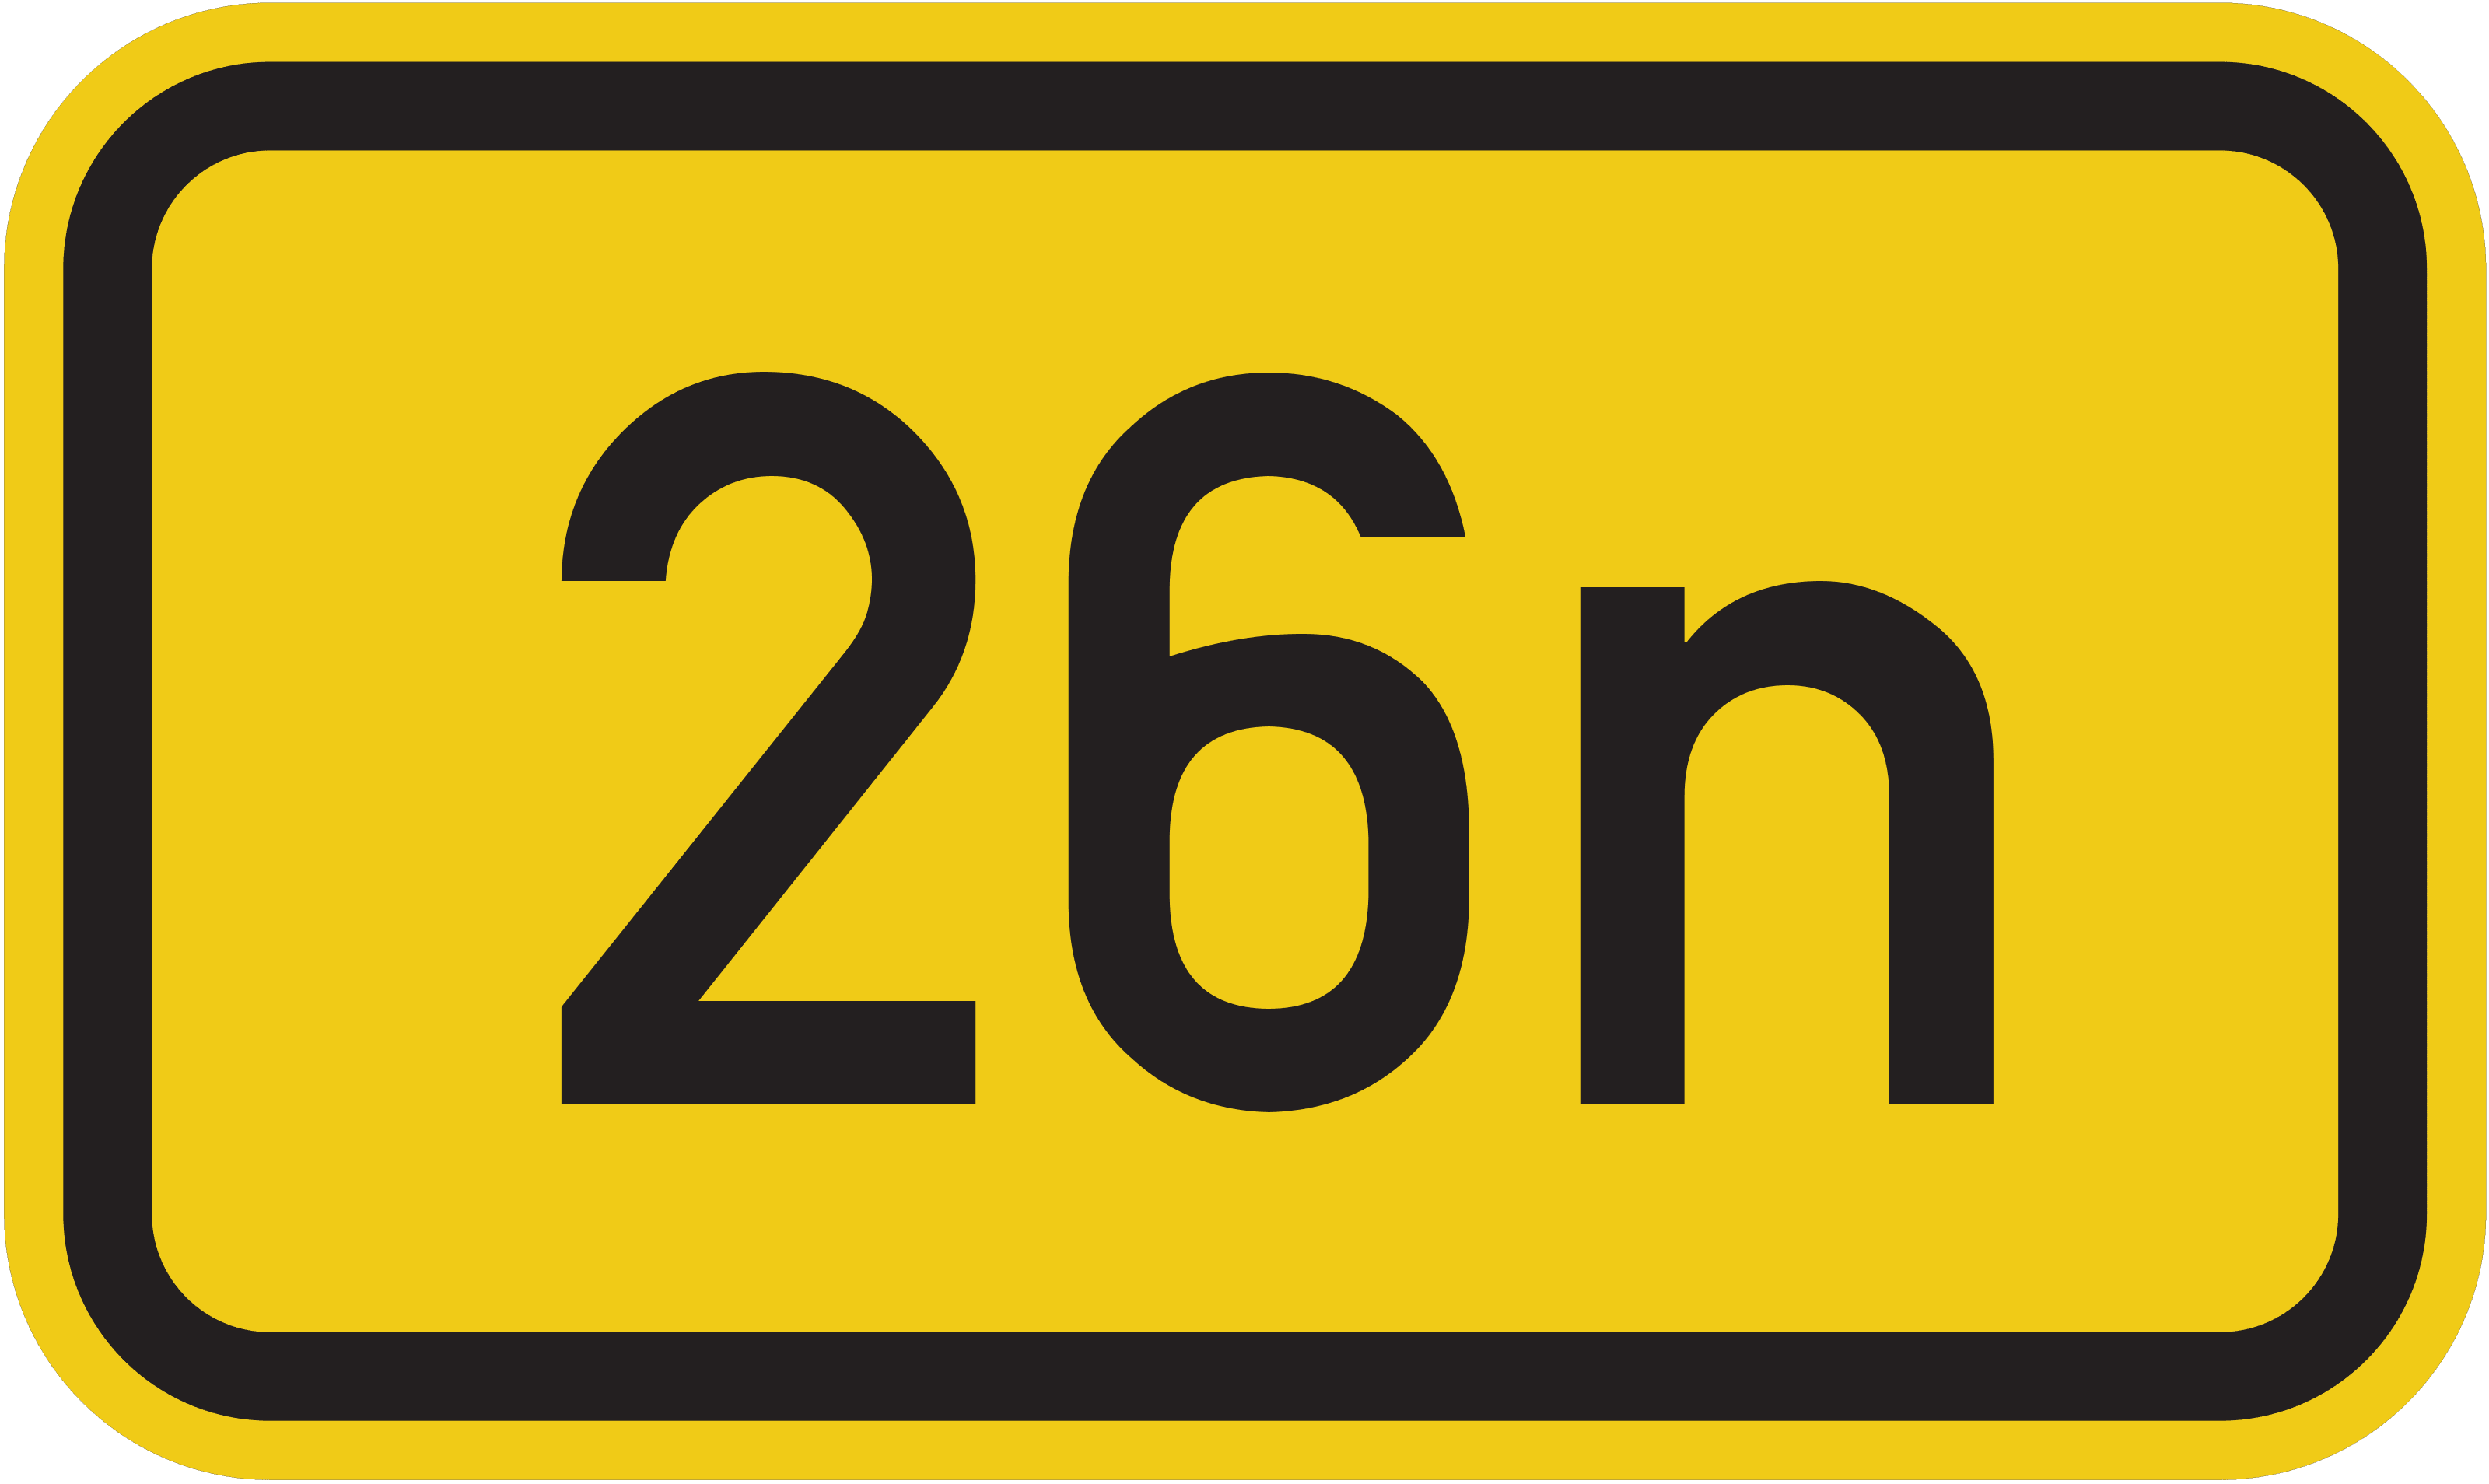 Straßenschild Bundesstraße 26n